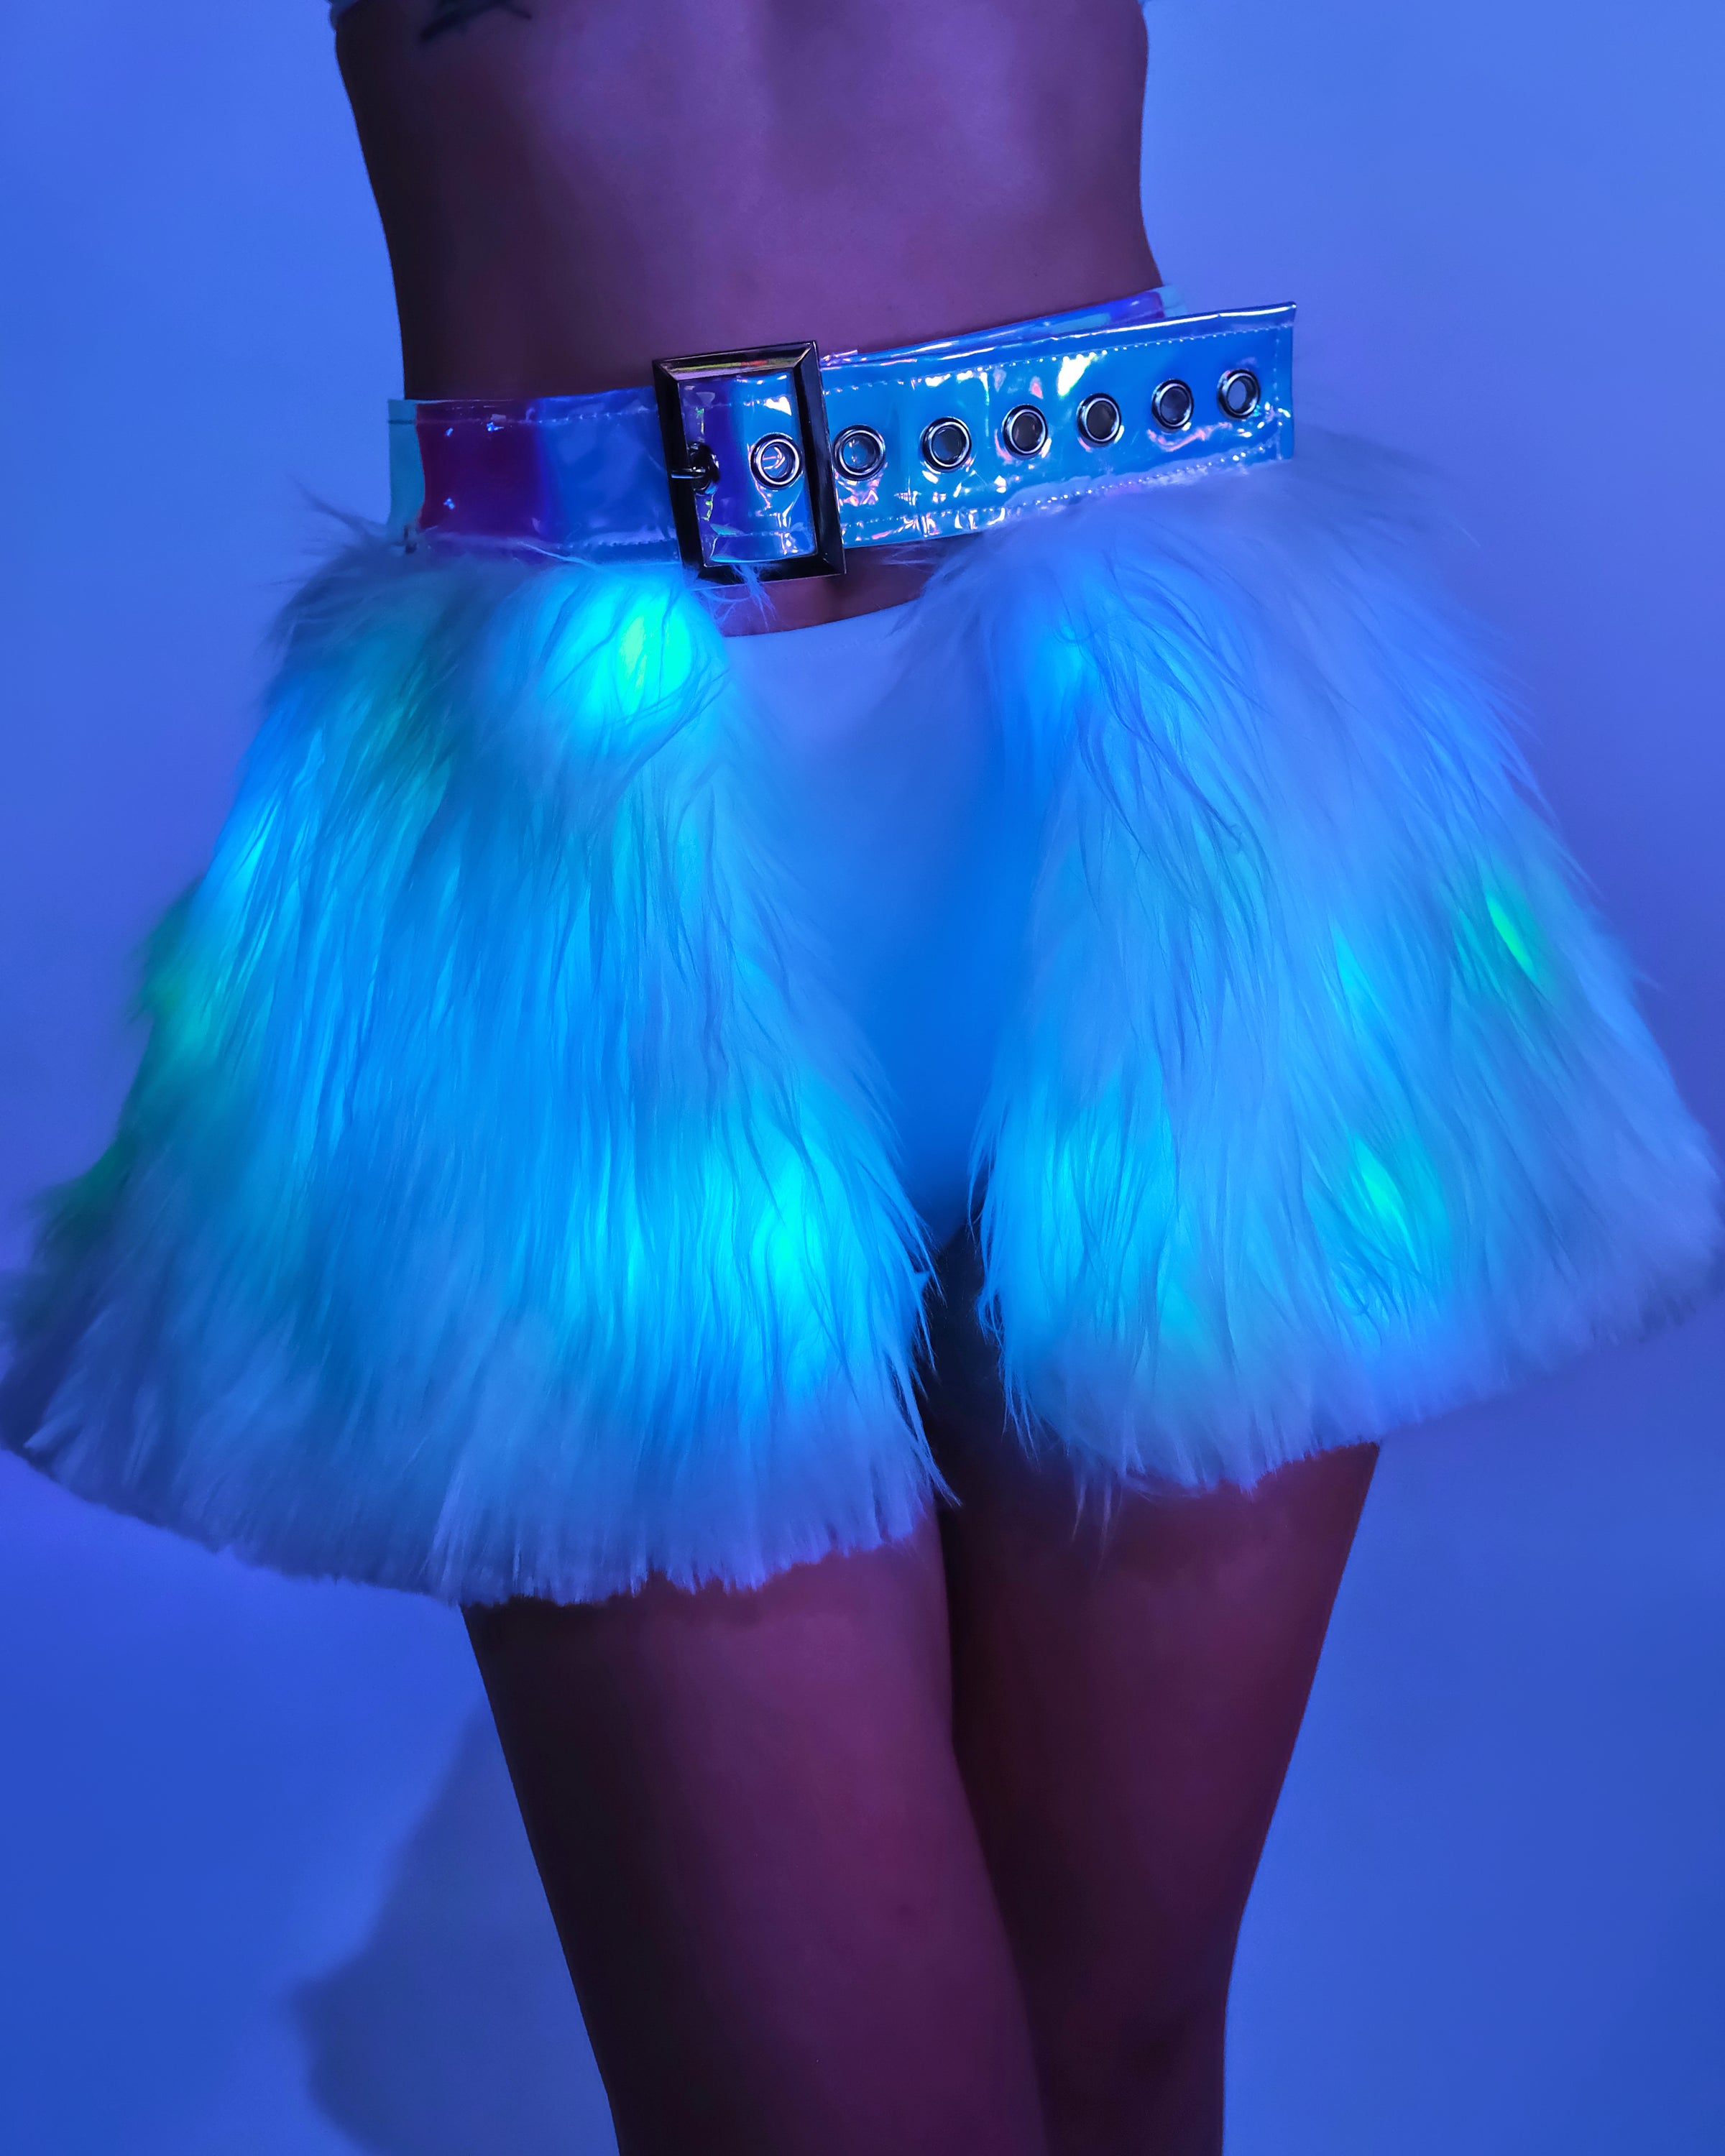  Led Fur Skirt Mini Light Up White Faux Fur Tutu Outfit with  Rainbow Lights Short Unicorn Rave Costume Dress for Women Girls (Led Skirt-S)  : Clothing, Shoes & Jewelry